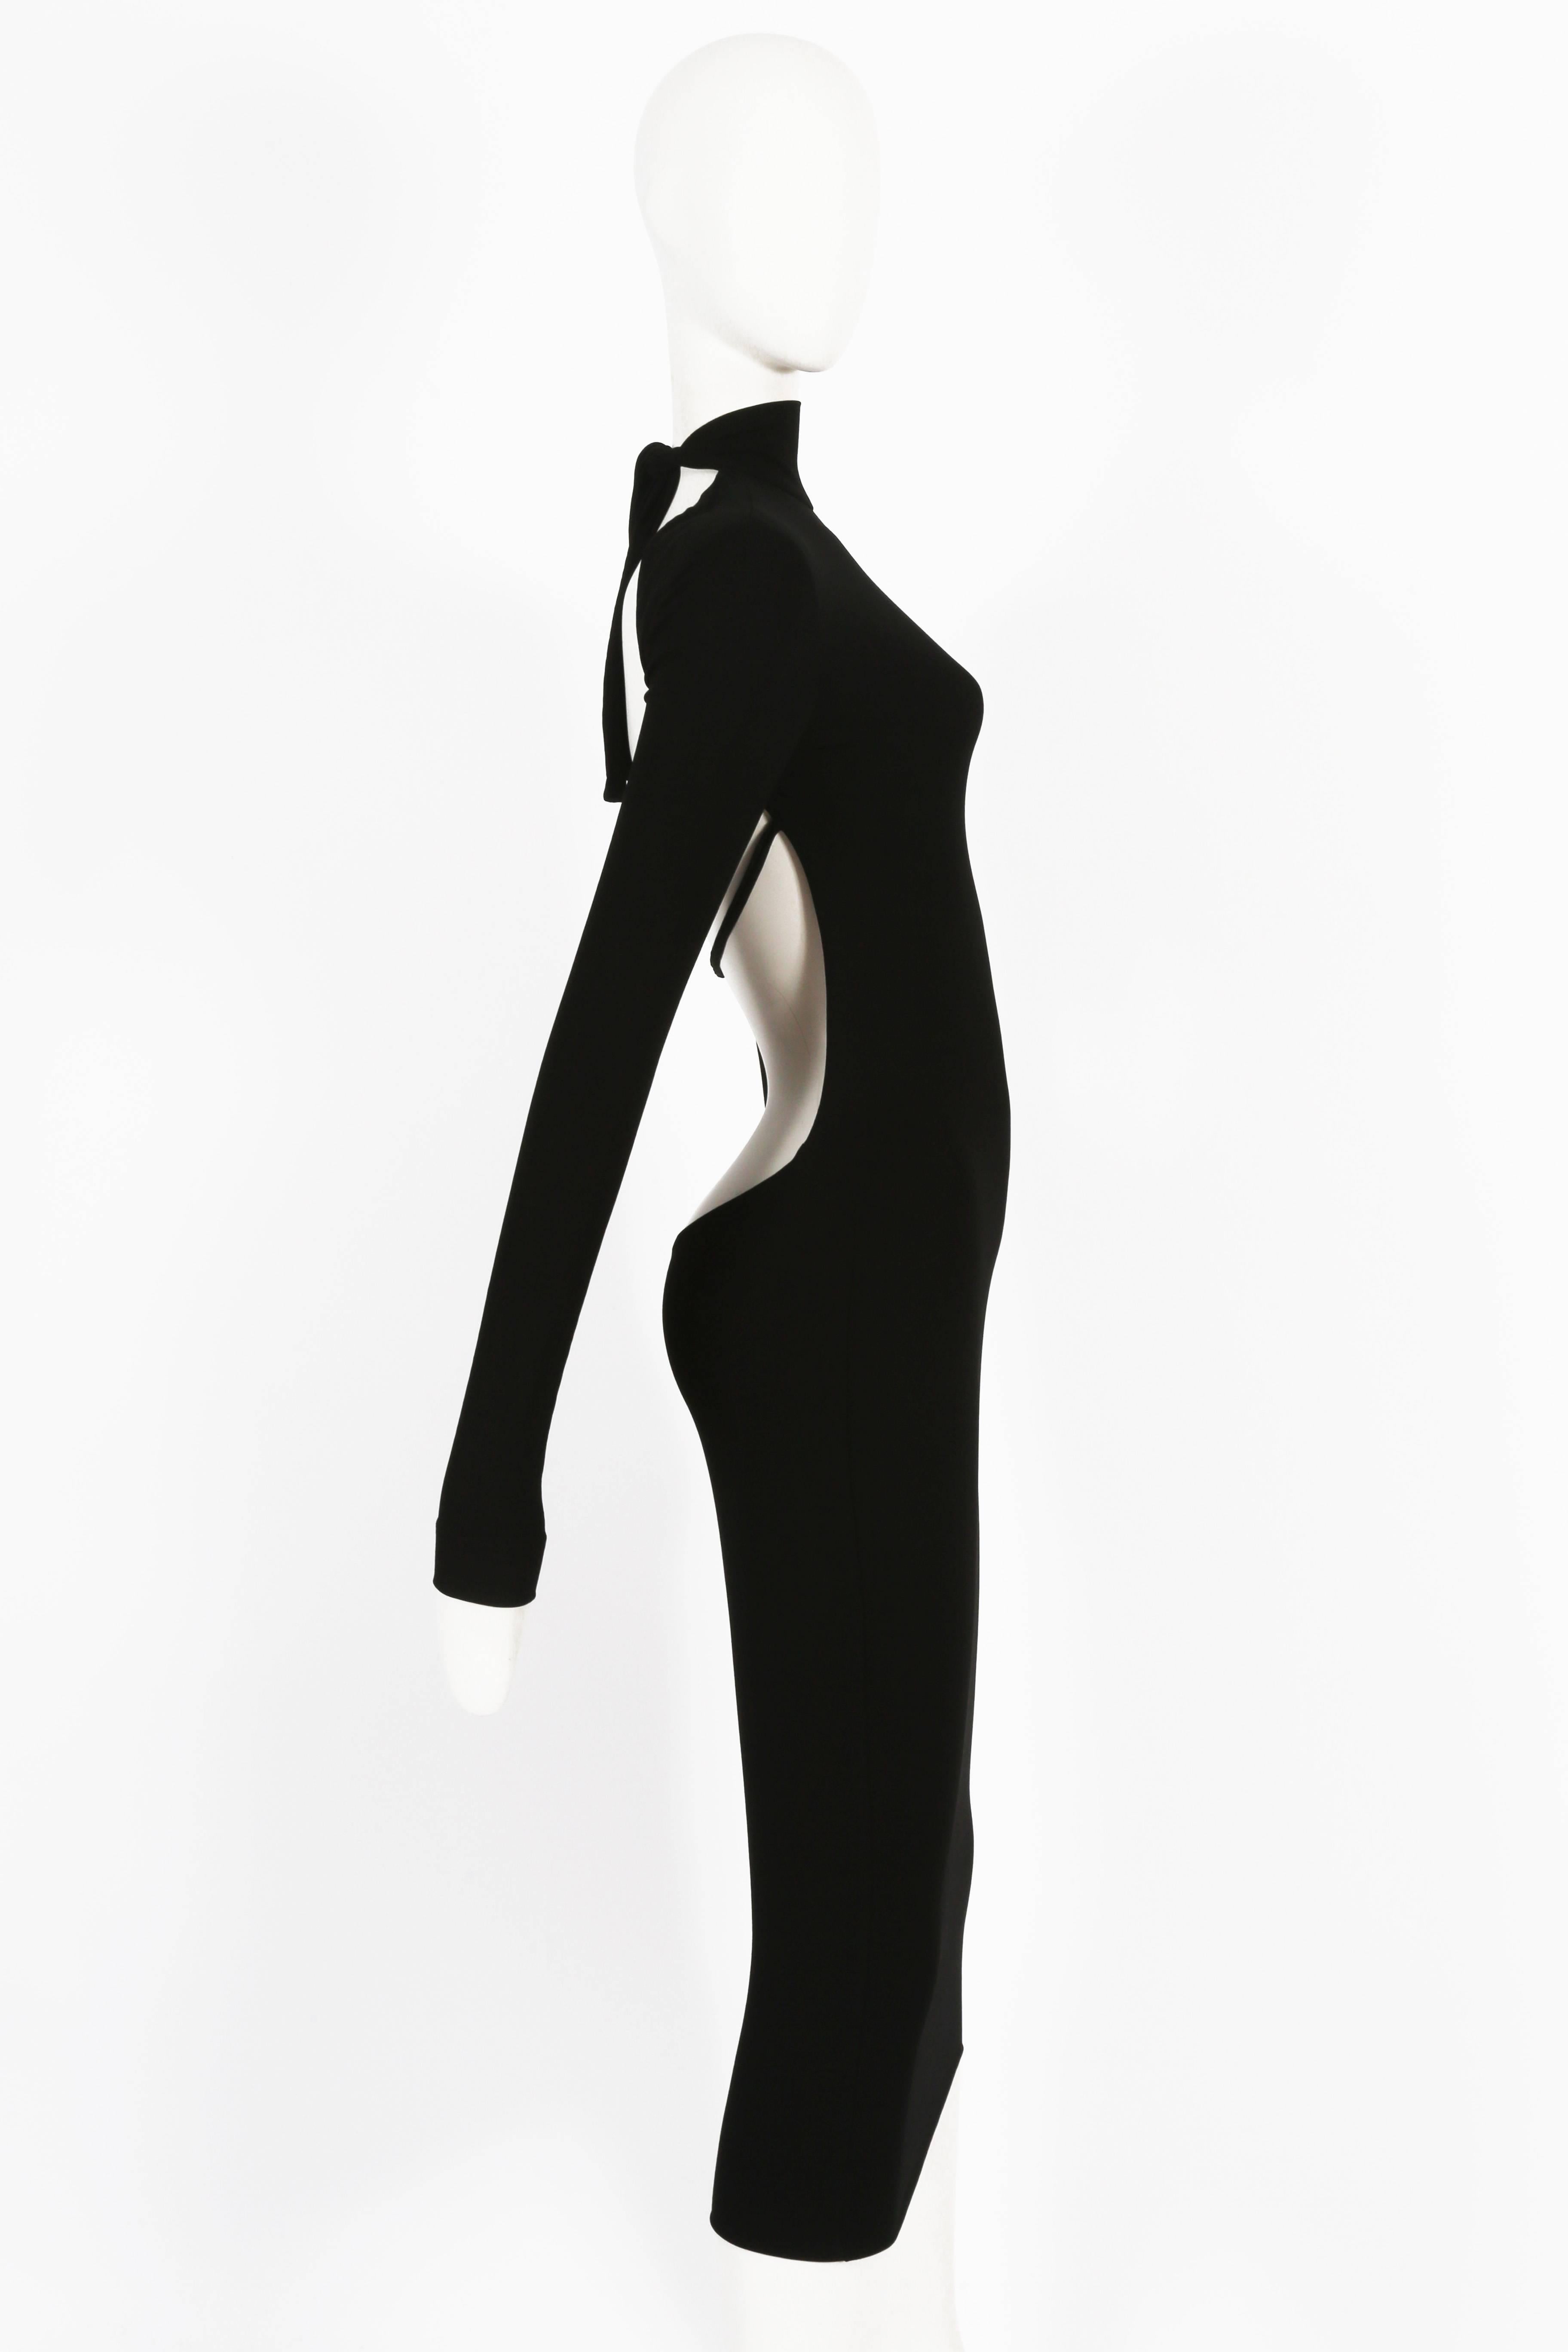 Black Dolce & Gabbana black bodycon low-back dress, circa 1990s